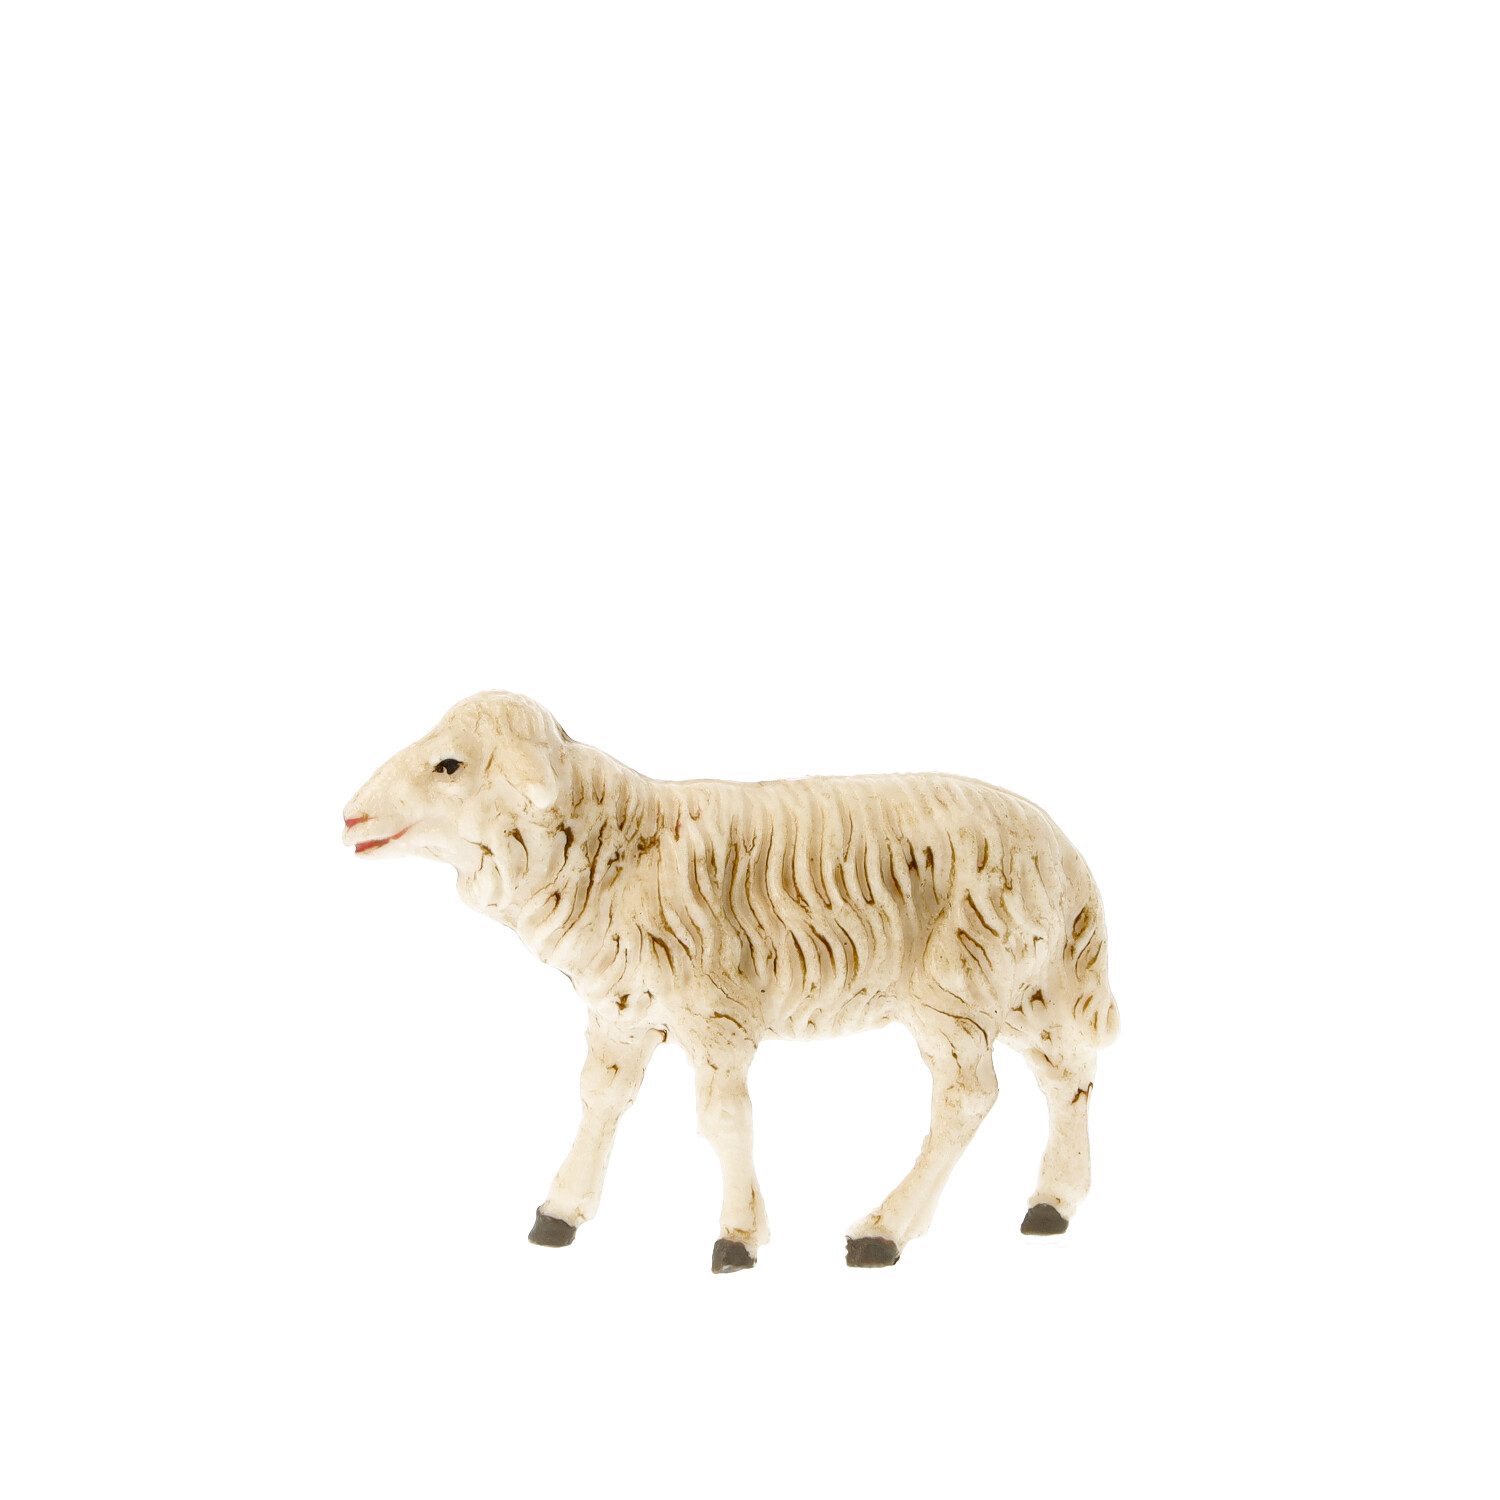 Schaf geradeaus blickend, zu 9cm Fig. (Kunststoff) - Marolin Plastik - Krippenfigur aus Kunststoff - made in Germany